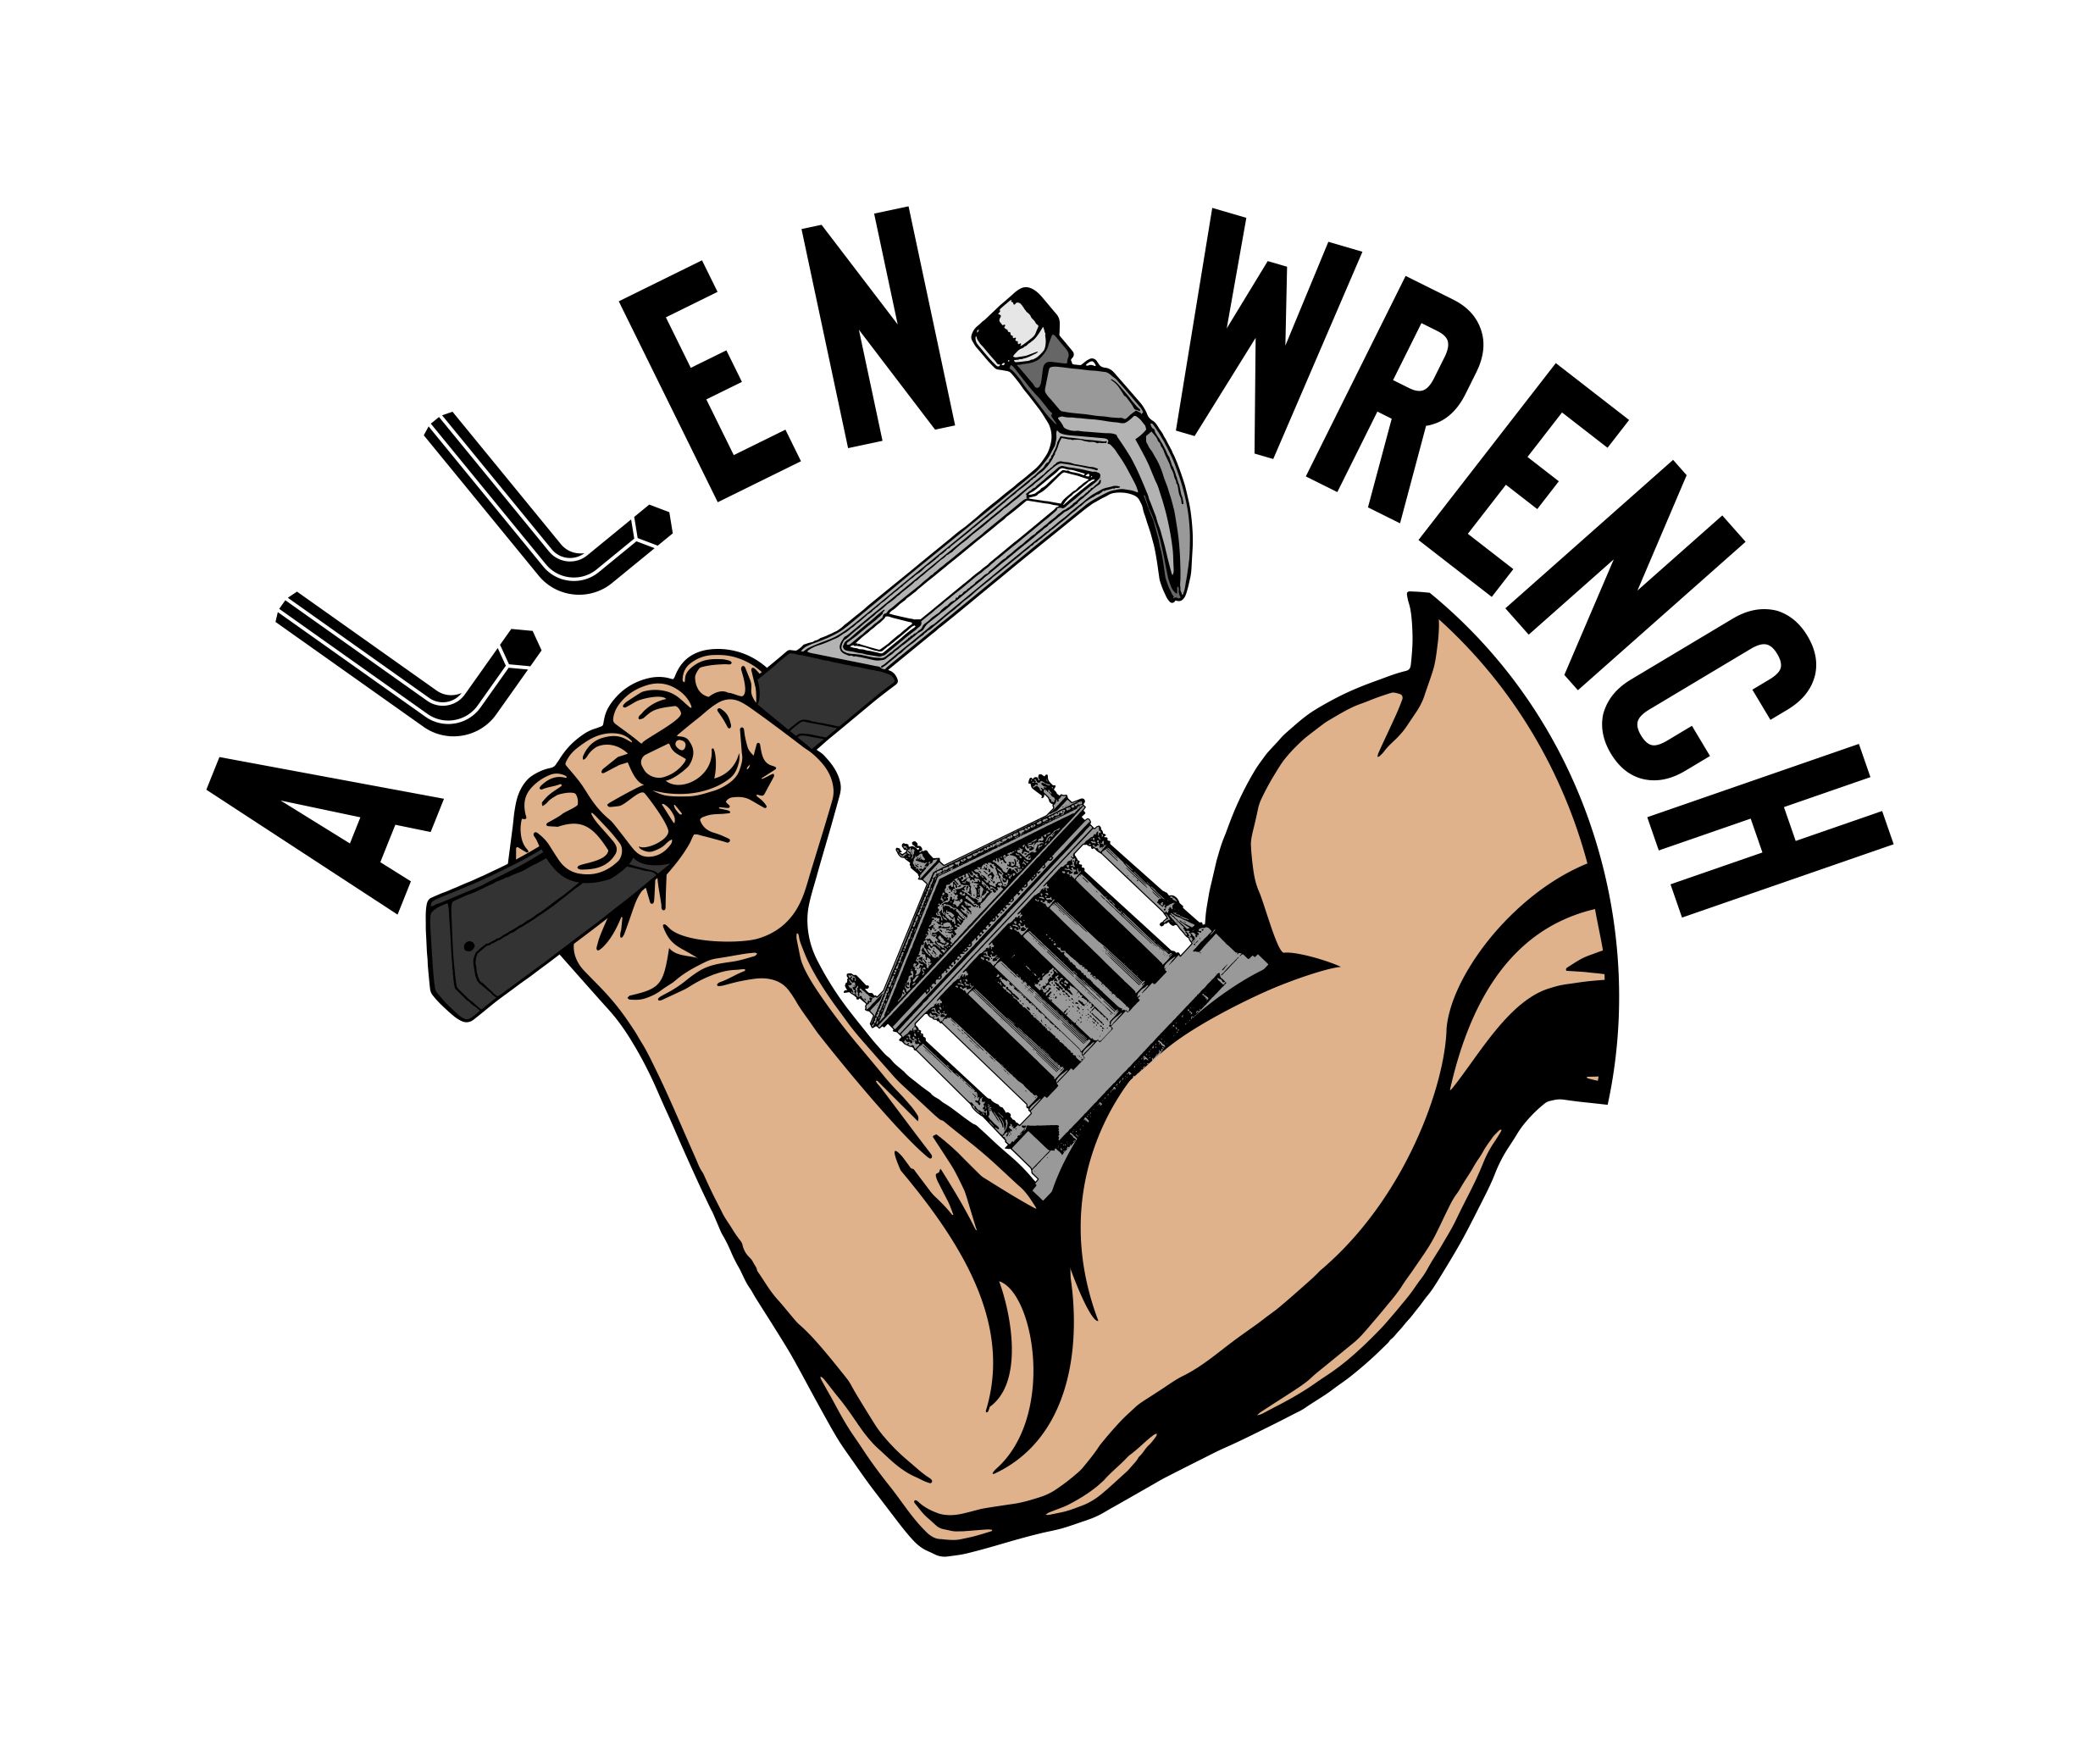 Allen Wrench Construction Logo